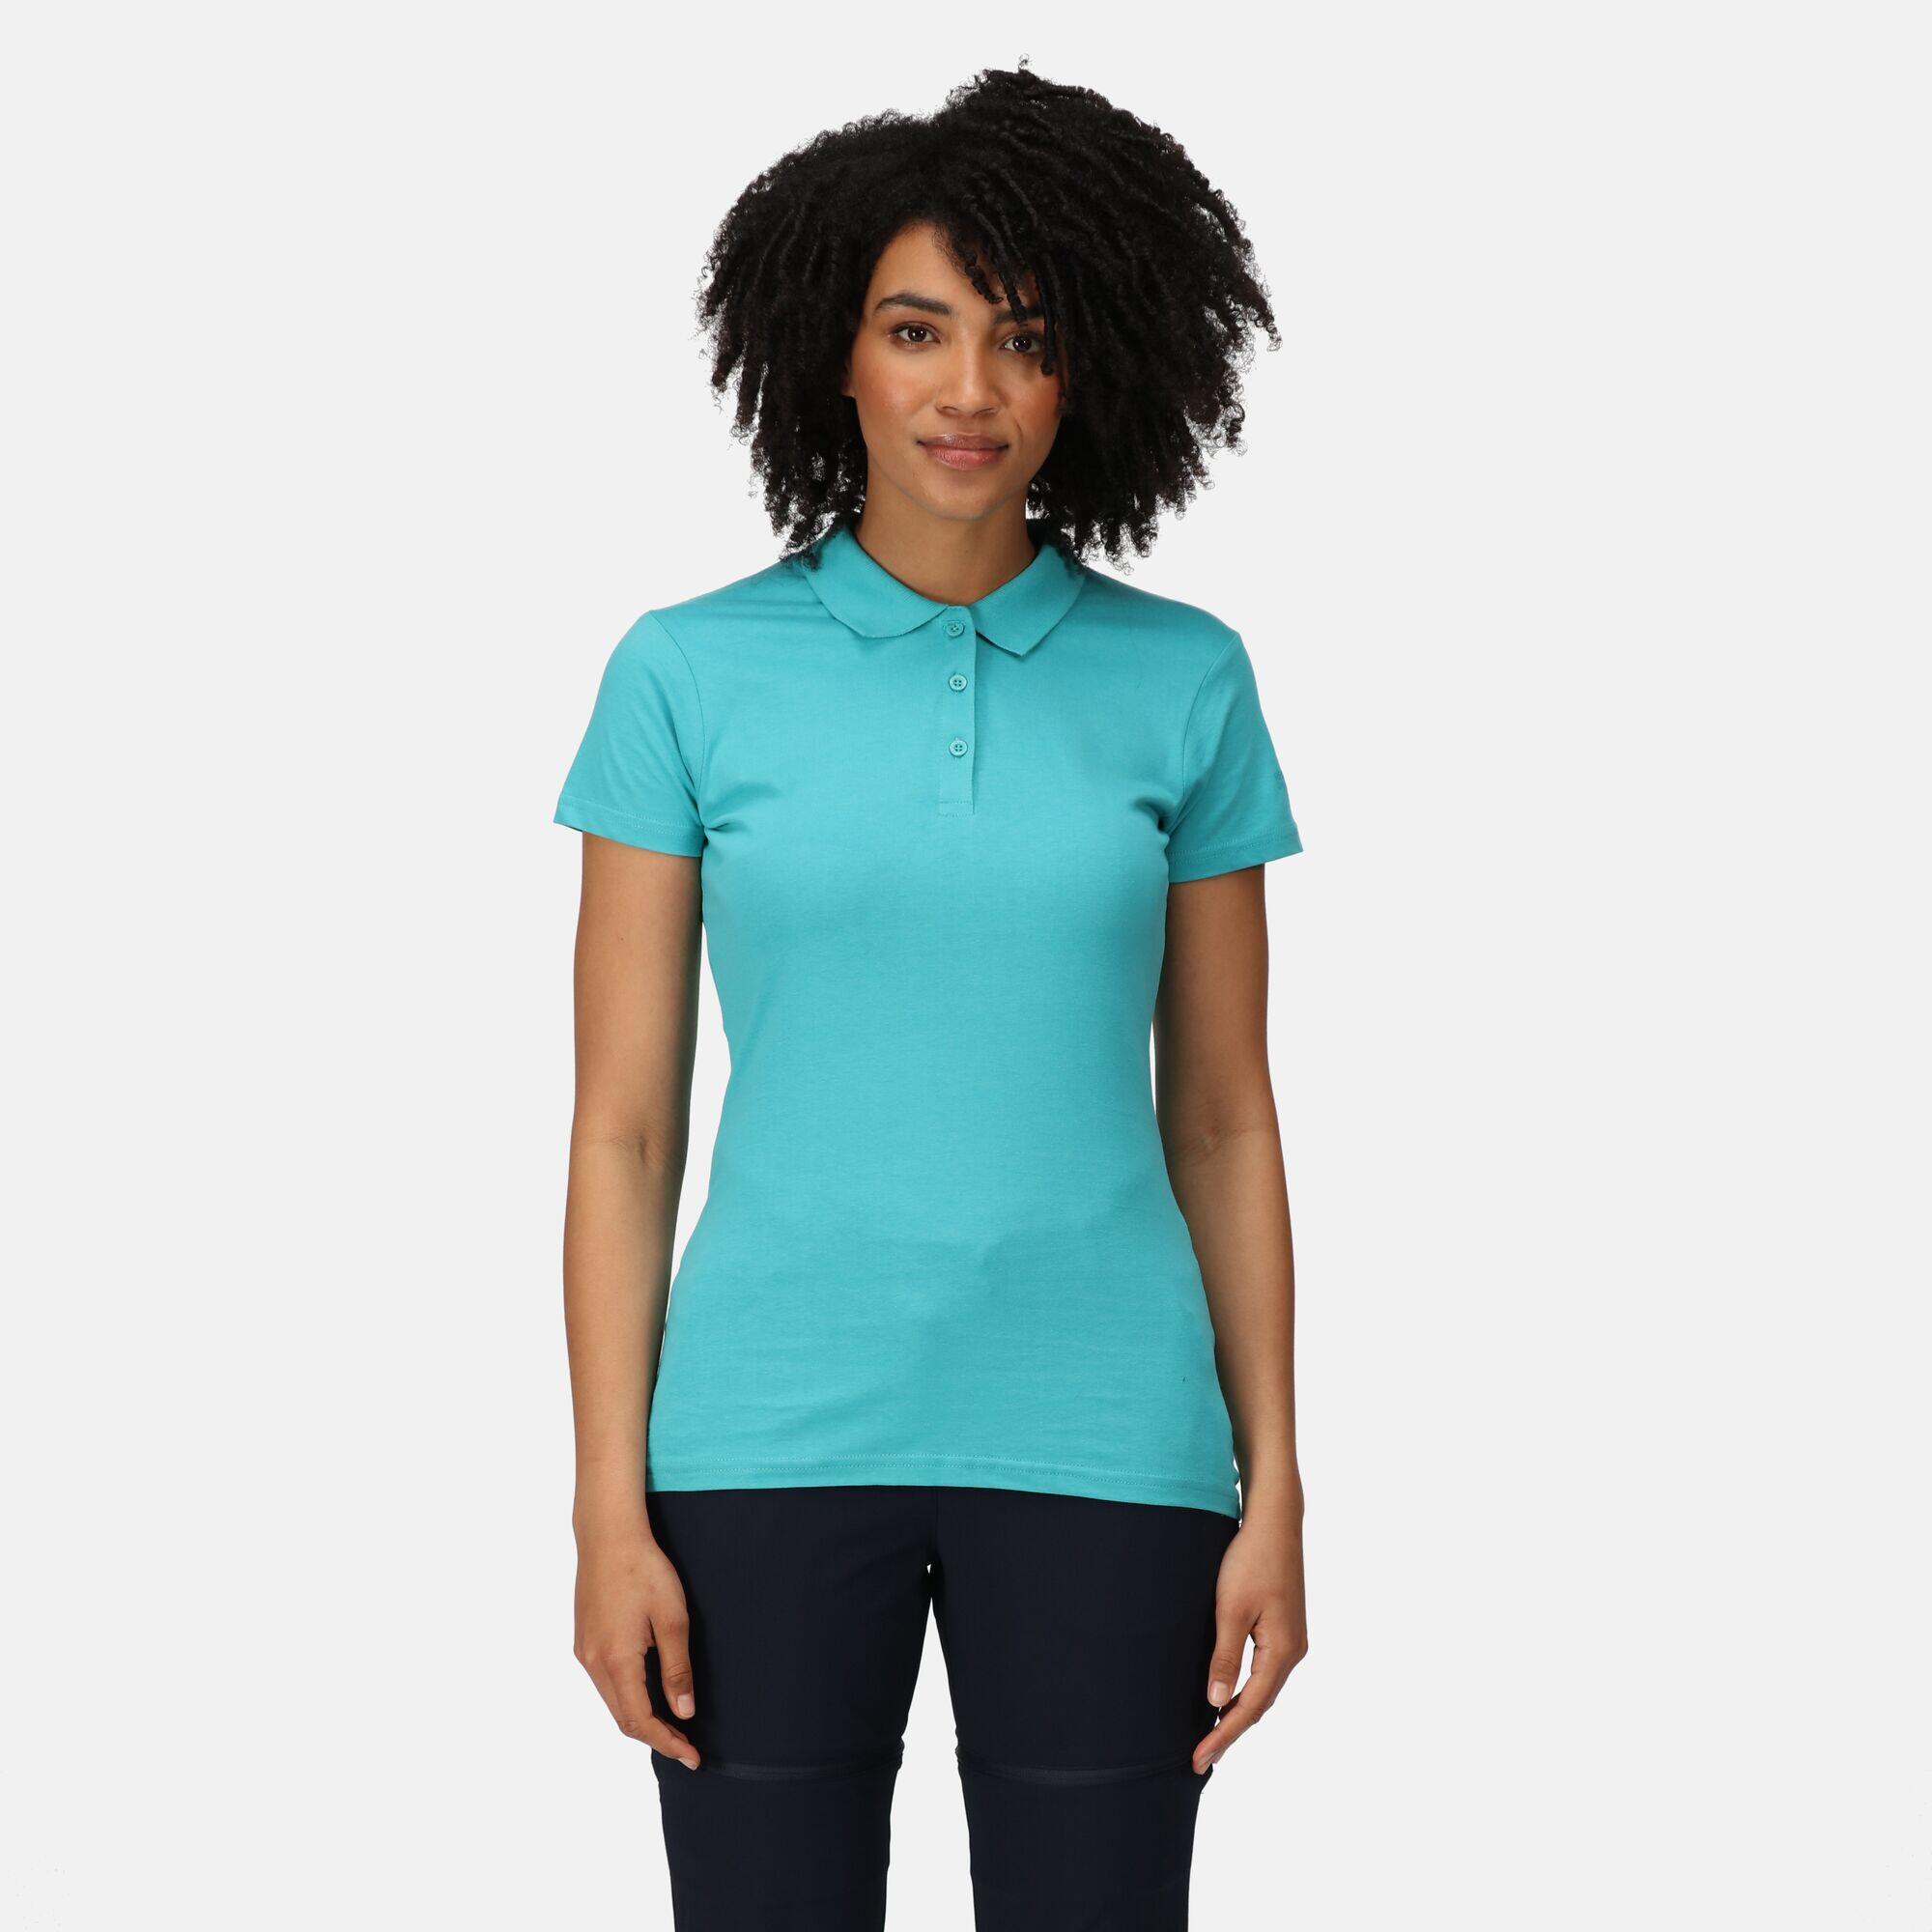 REGATTA Sinton Women's Fitness Short Sleeve T-Shirt - Turquoise